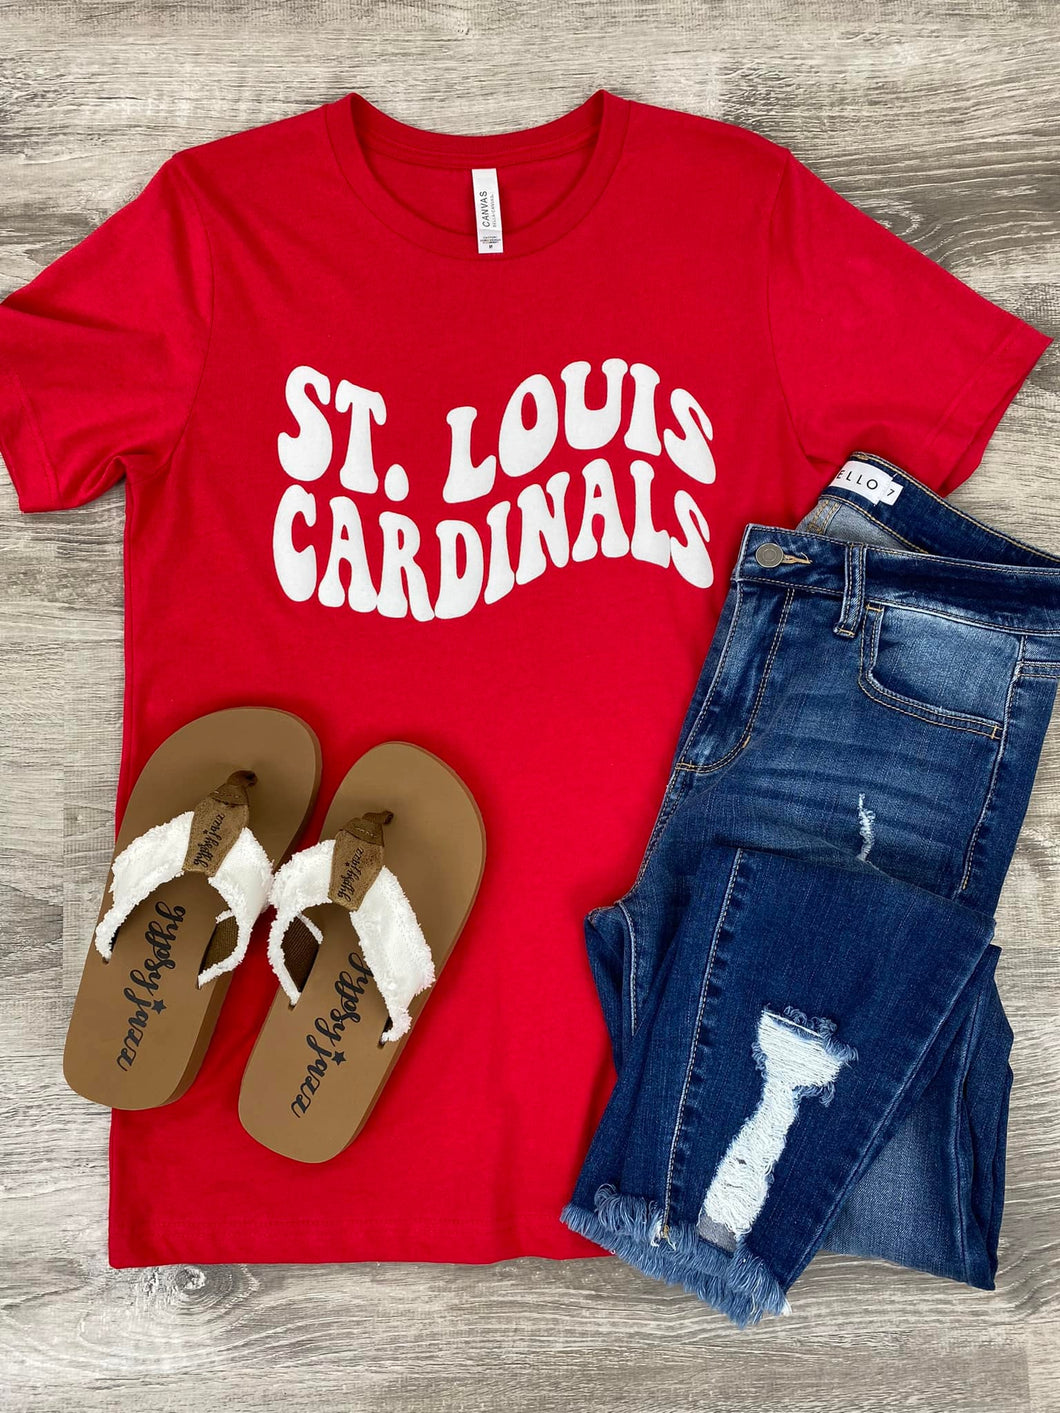 St. Louis Cardinals Retro Tee